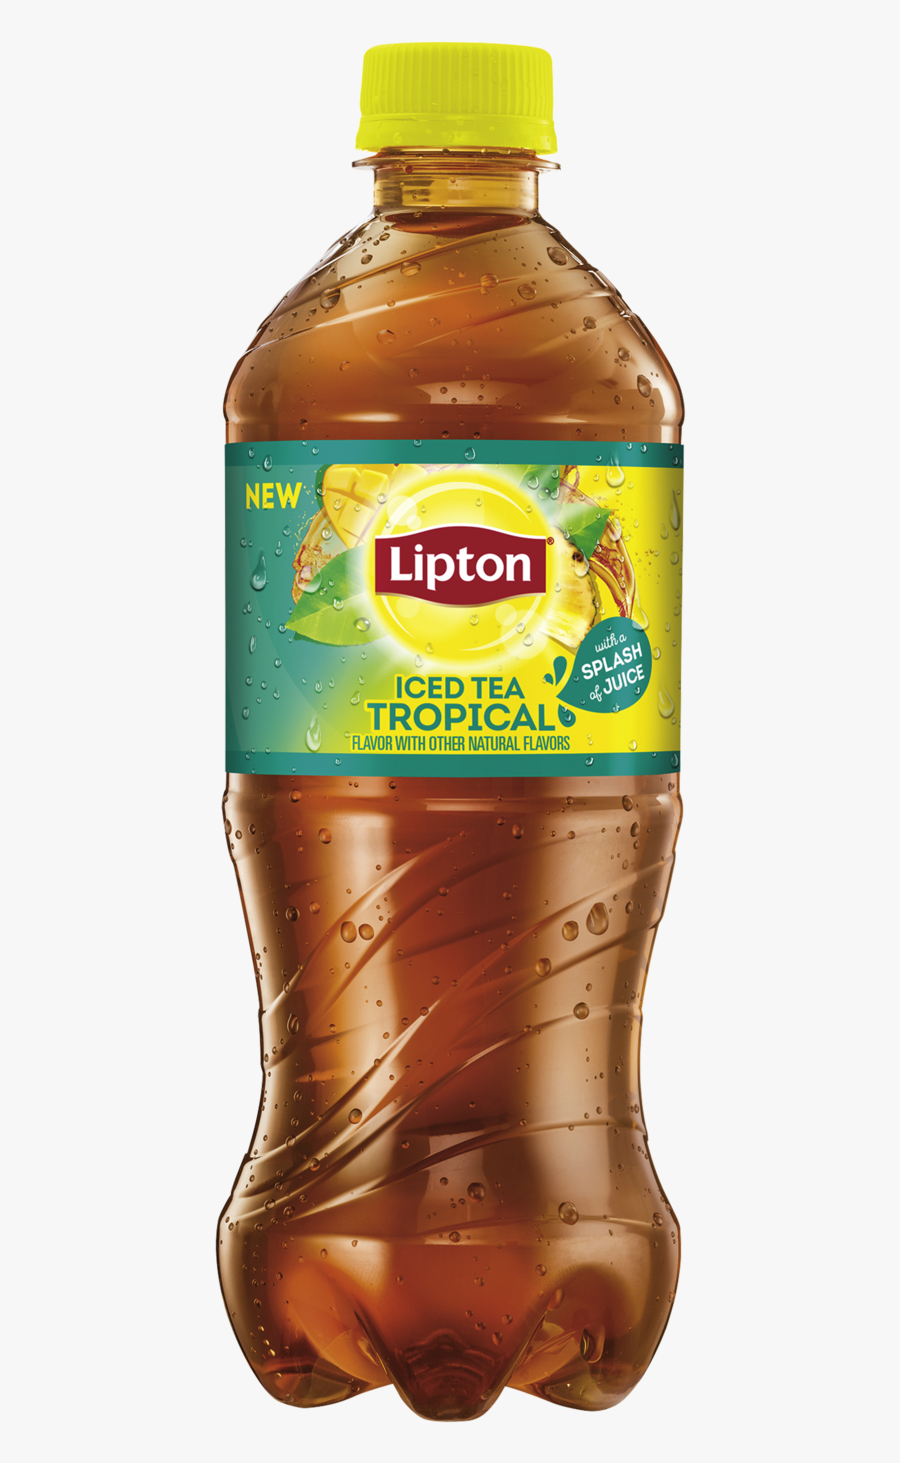 Black Iced Tea With A Splash Of Juice Tropical - Lipton Iced Tea Tropical, Transparent Clipart